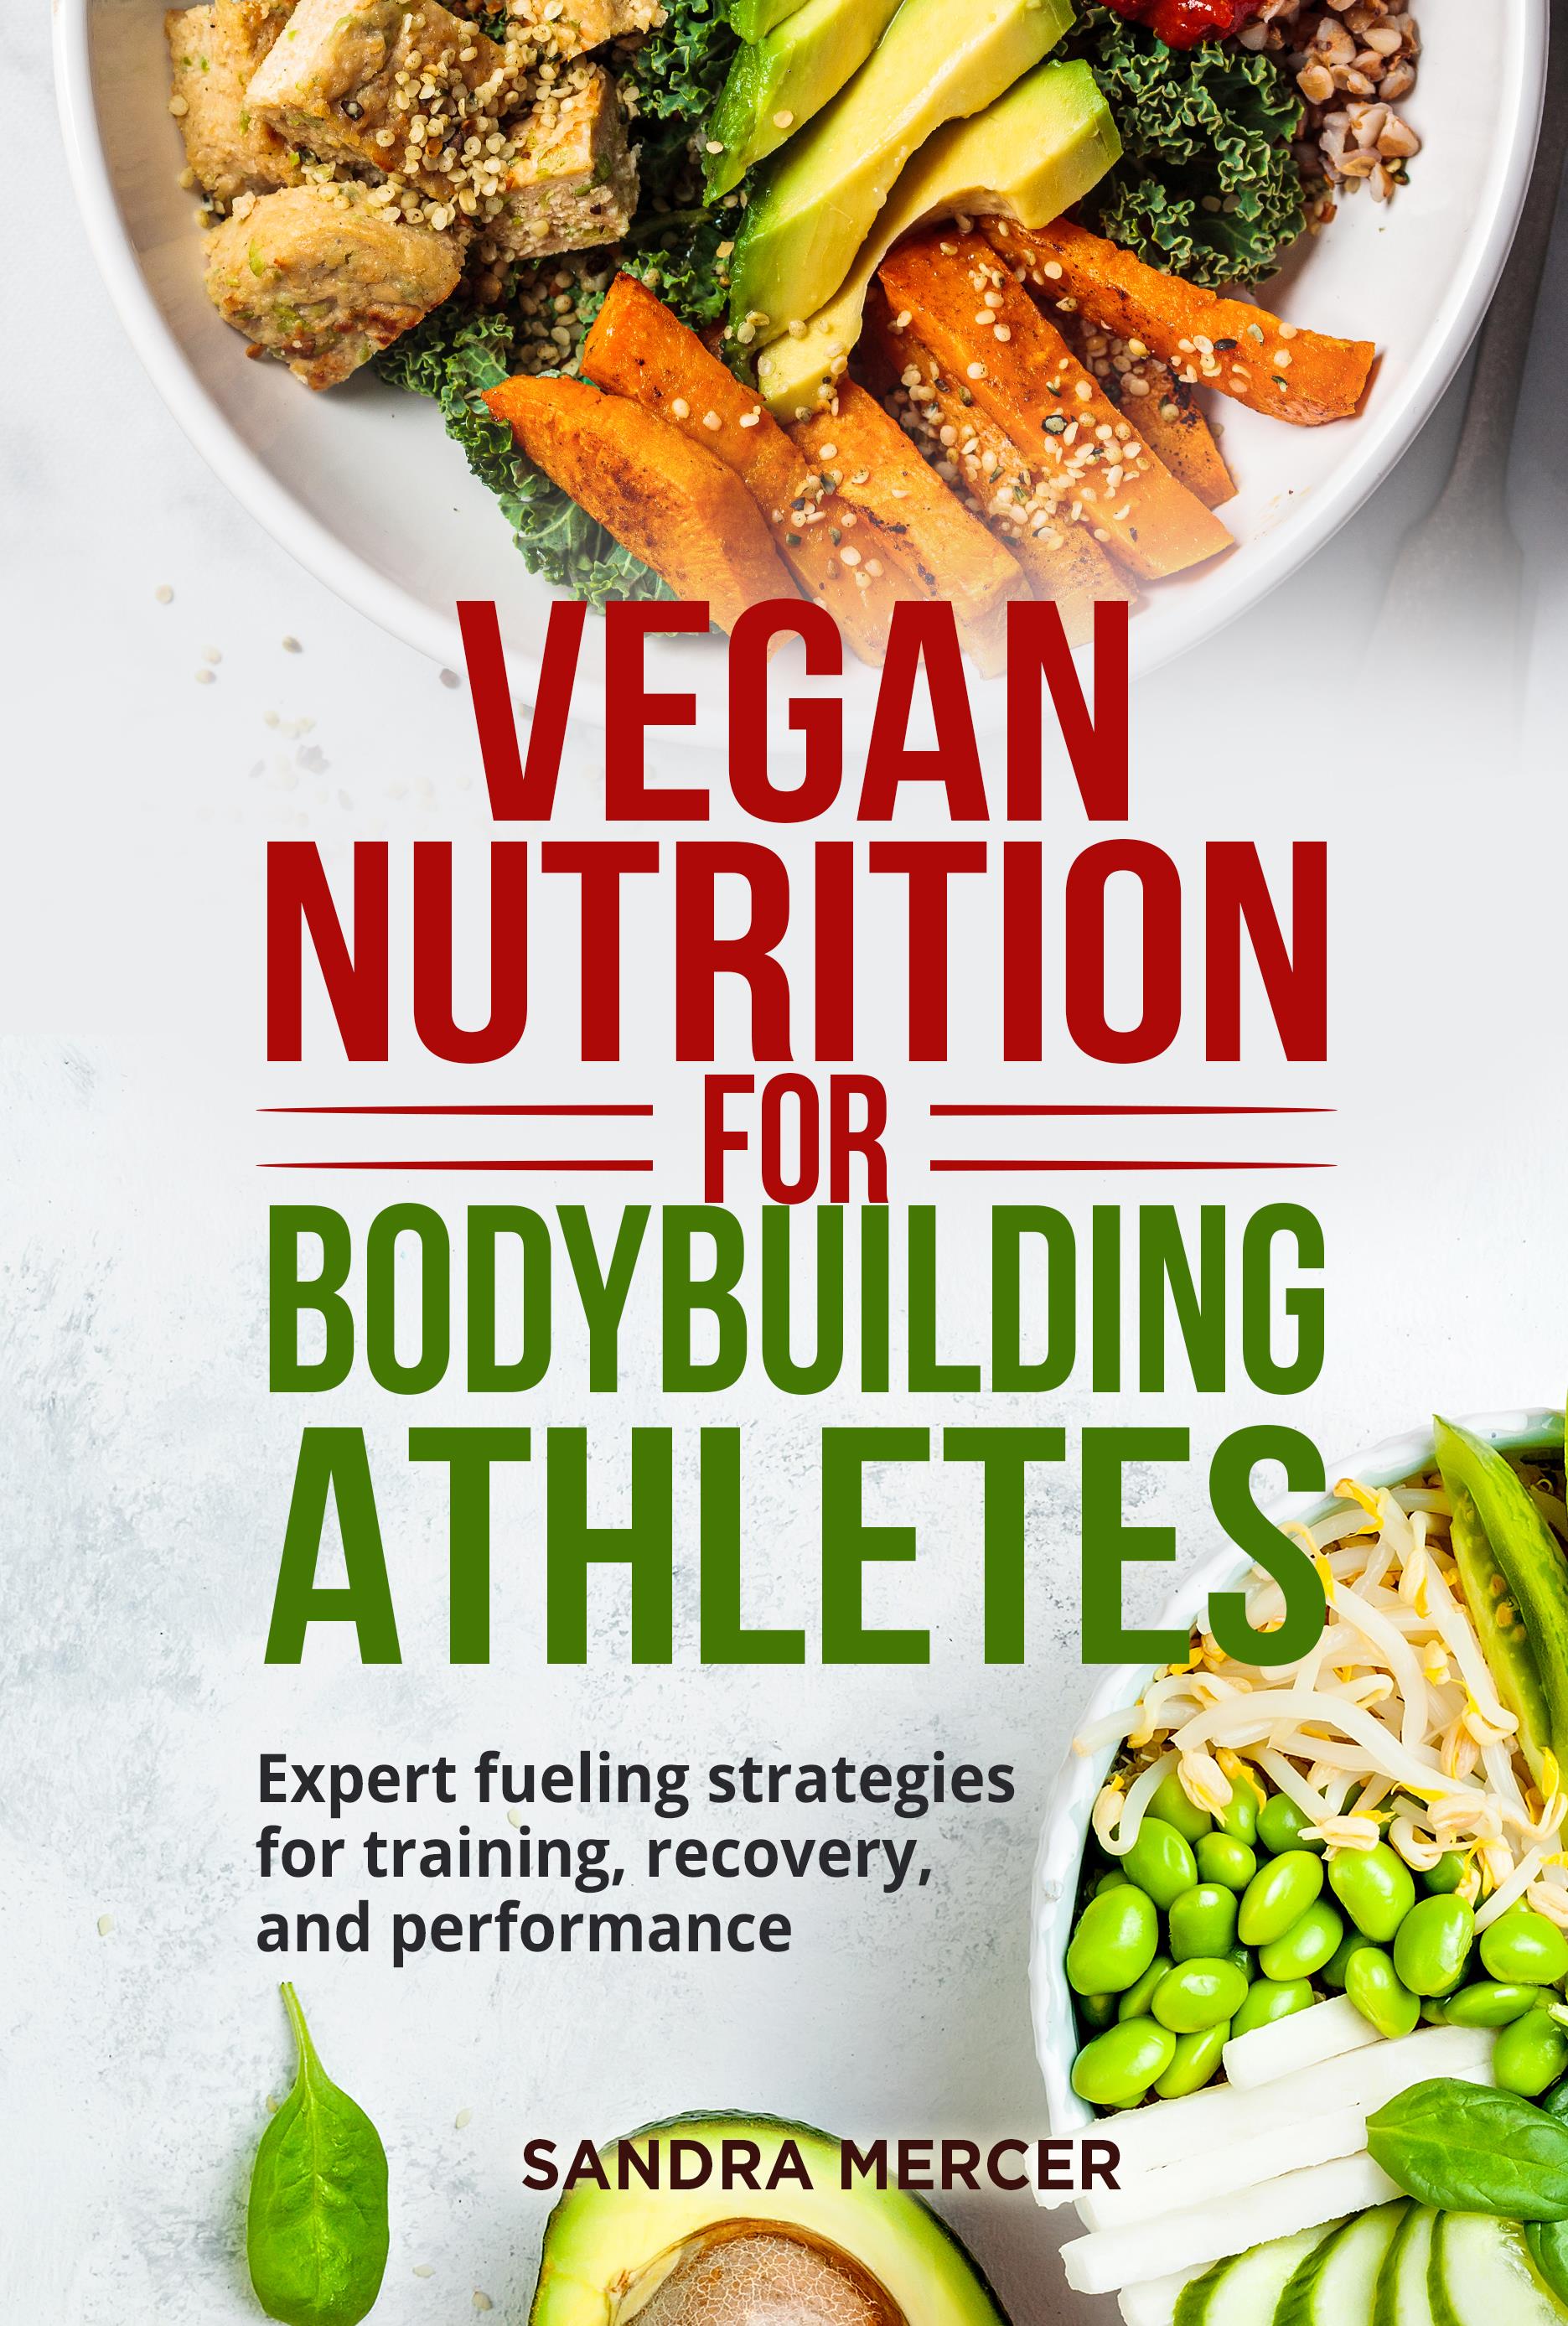 Vegan nutrition for bodybuilding athletes